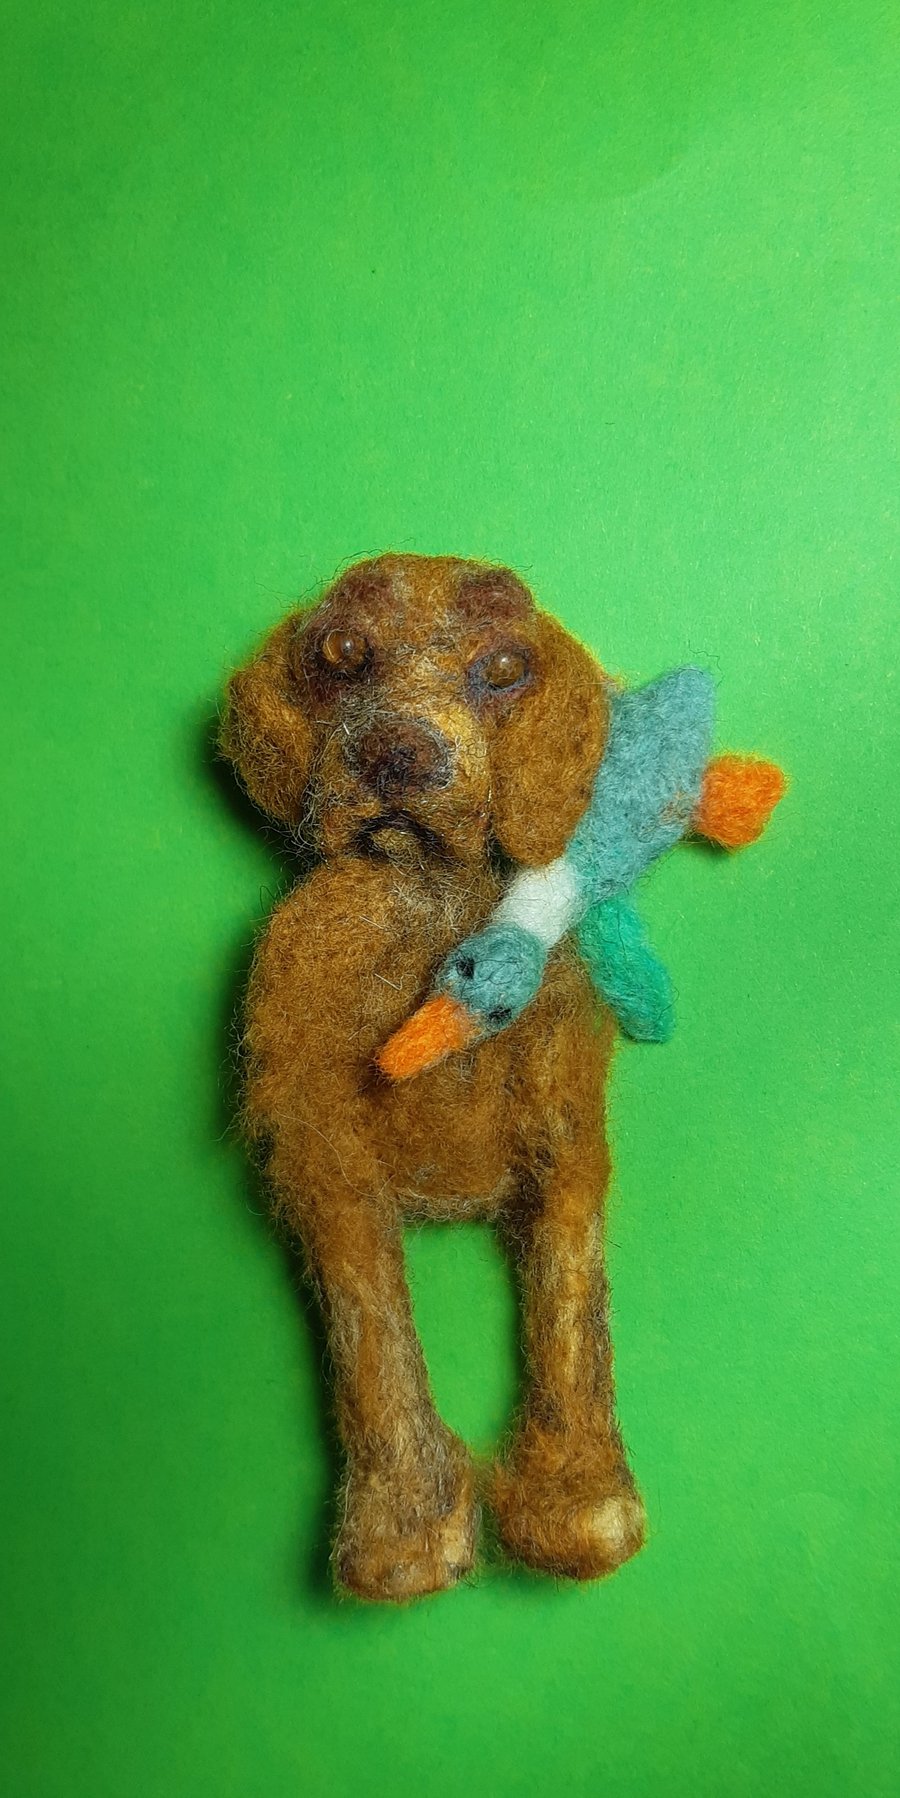 Vizsla viszla puppy dog brooch ornament with toy duck